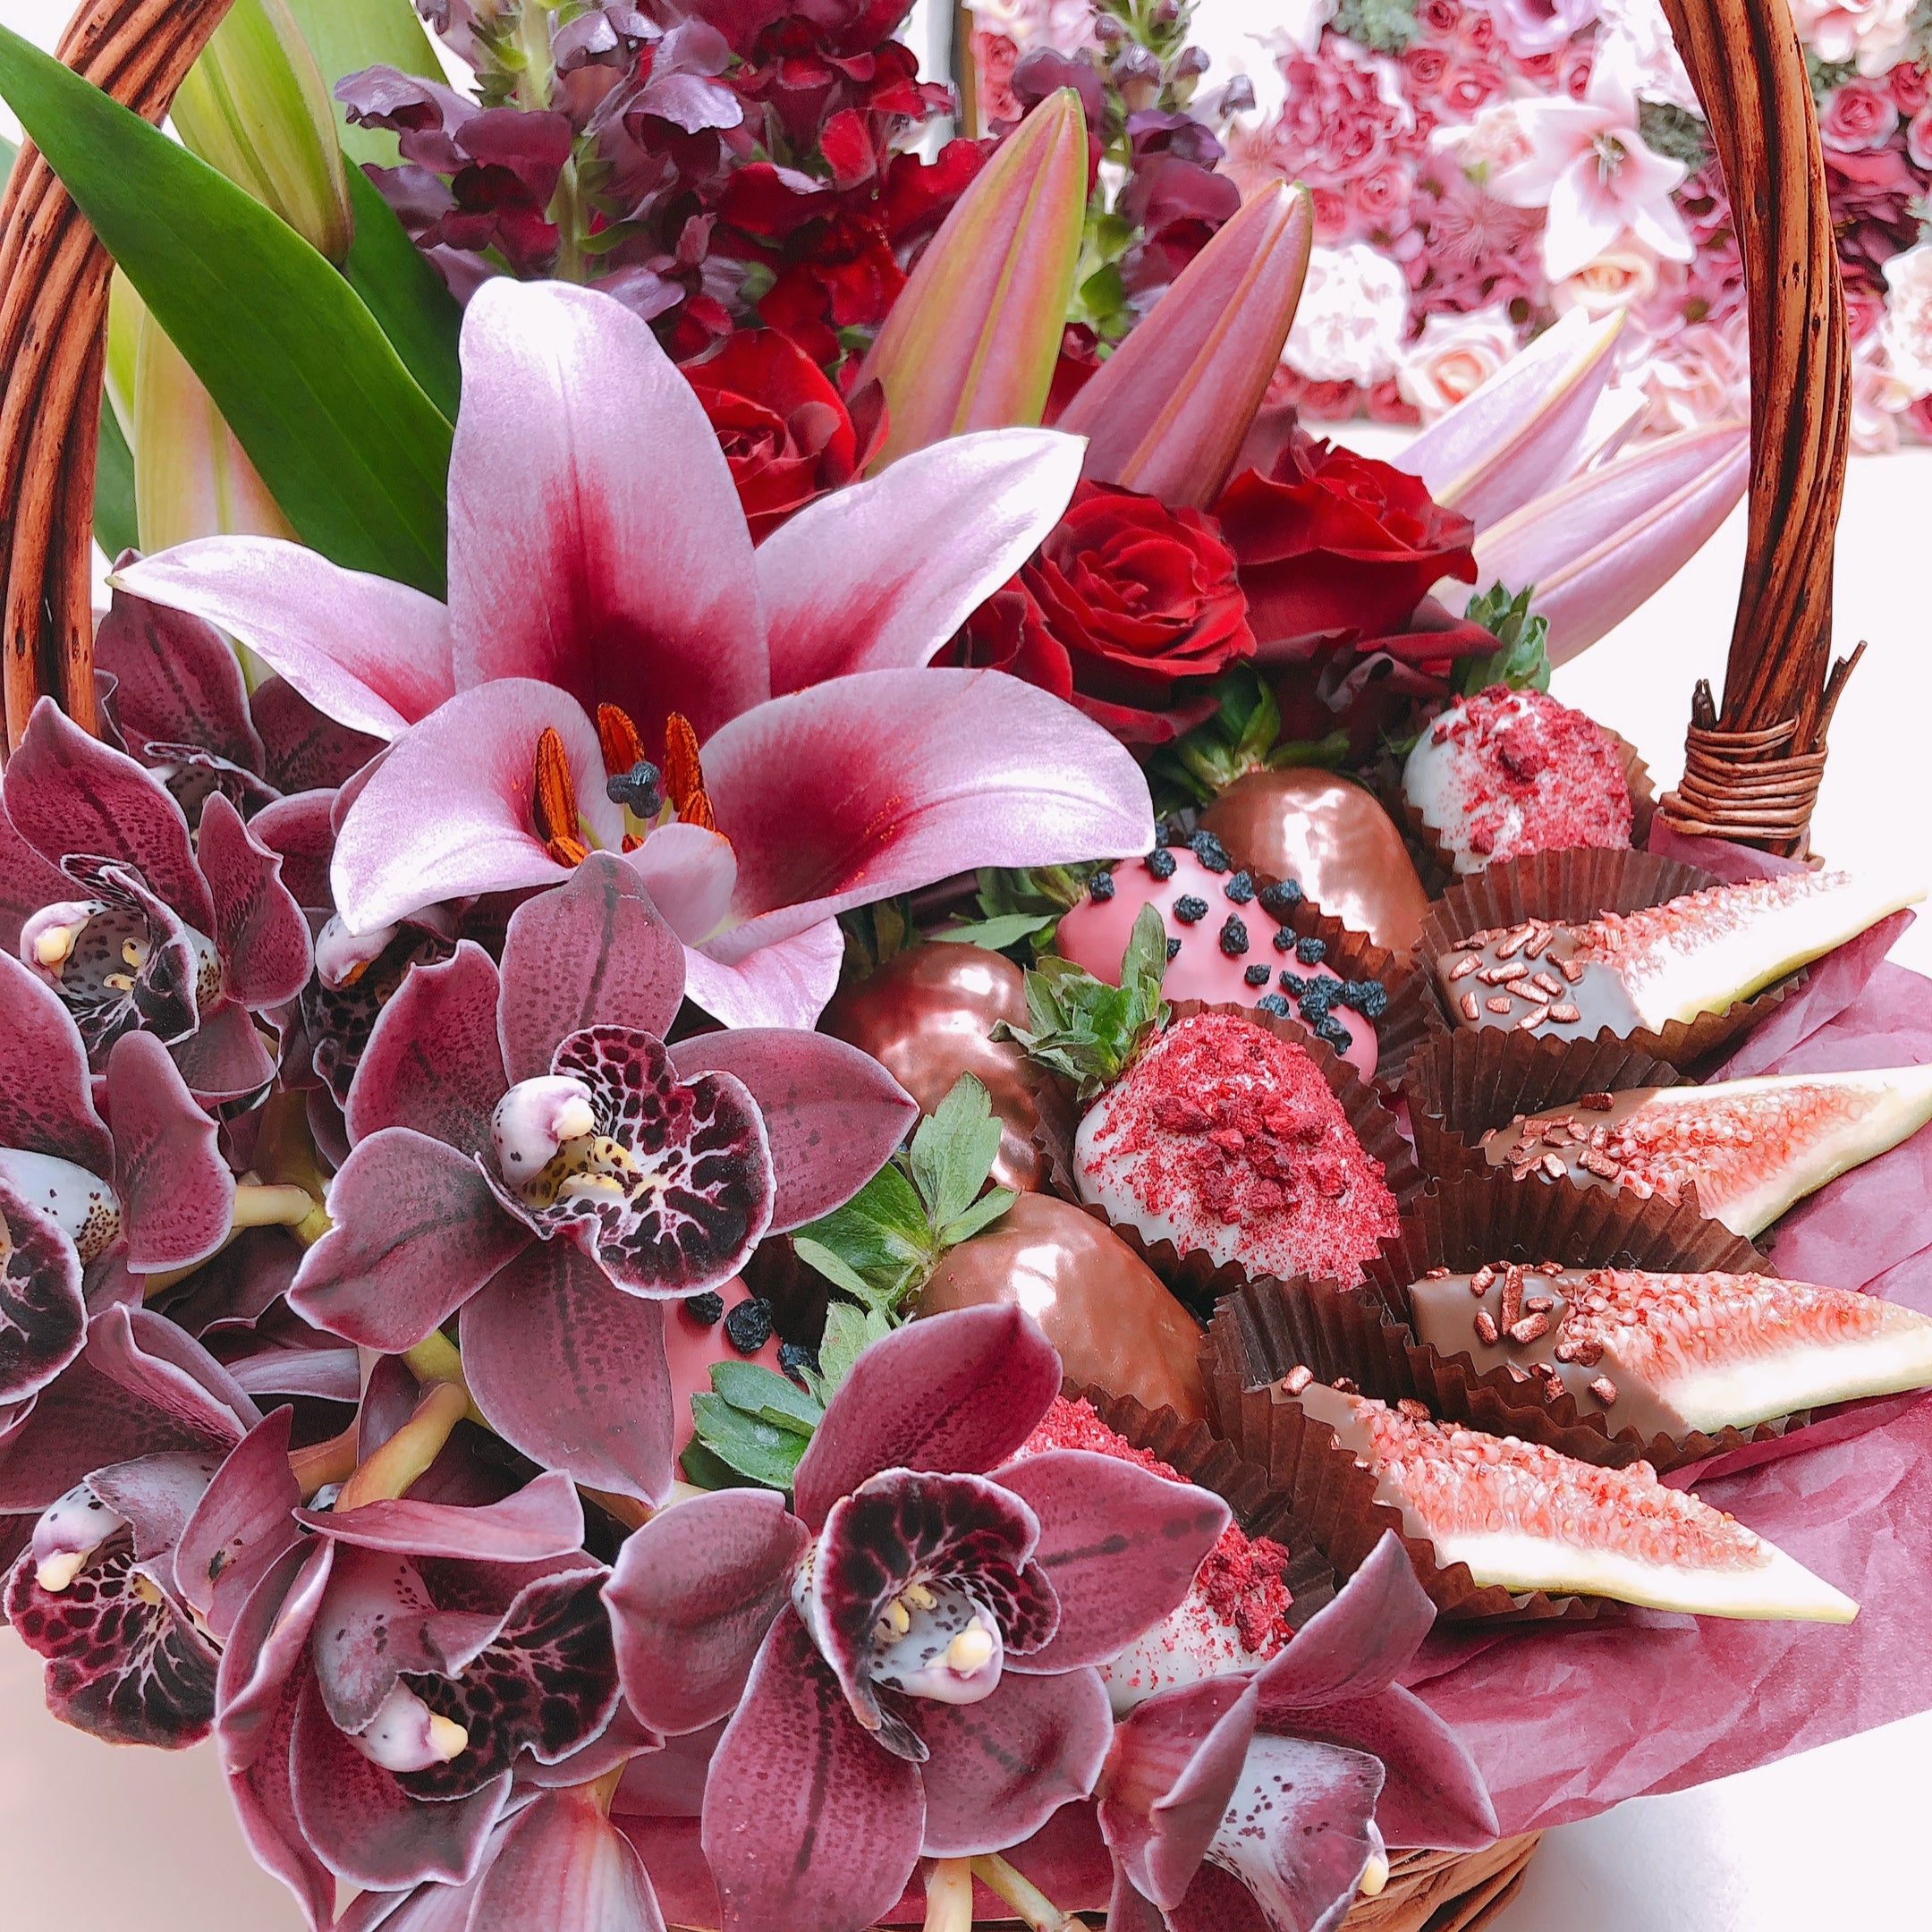 Luxury basket full of handmade chocolate covered strawberries and chocolate figs